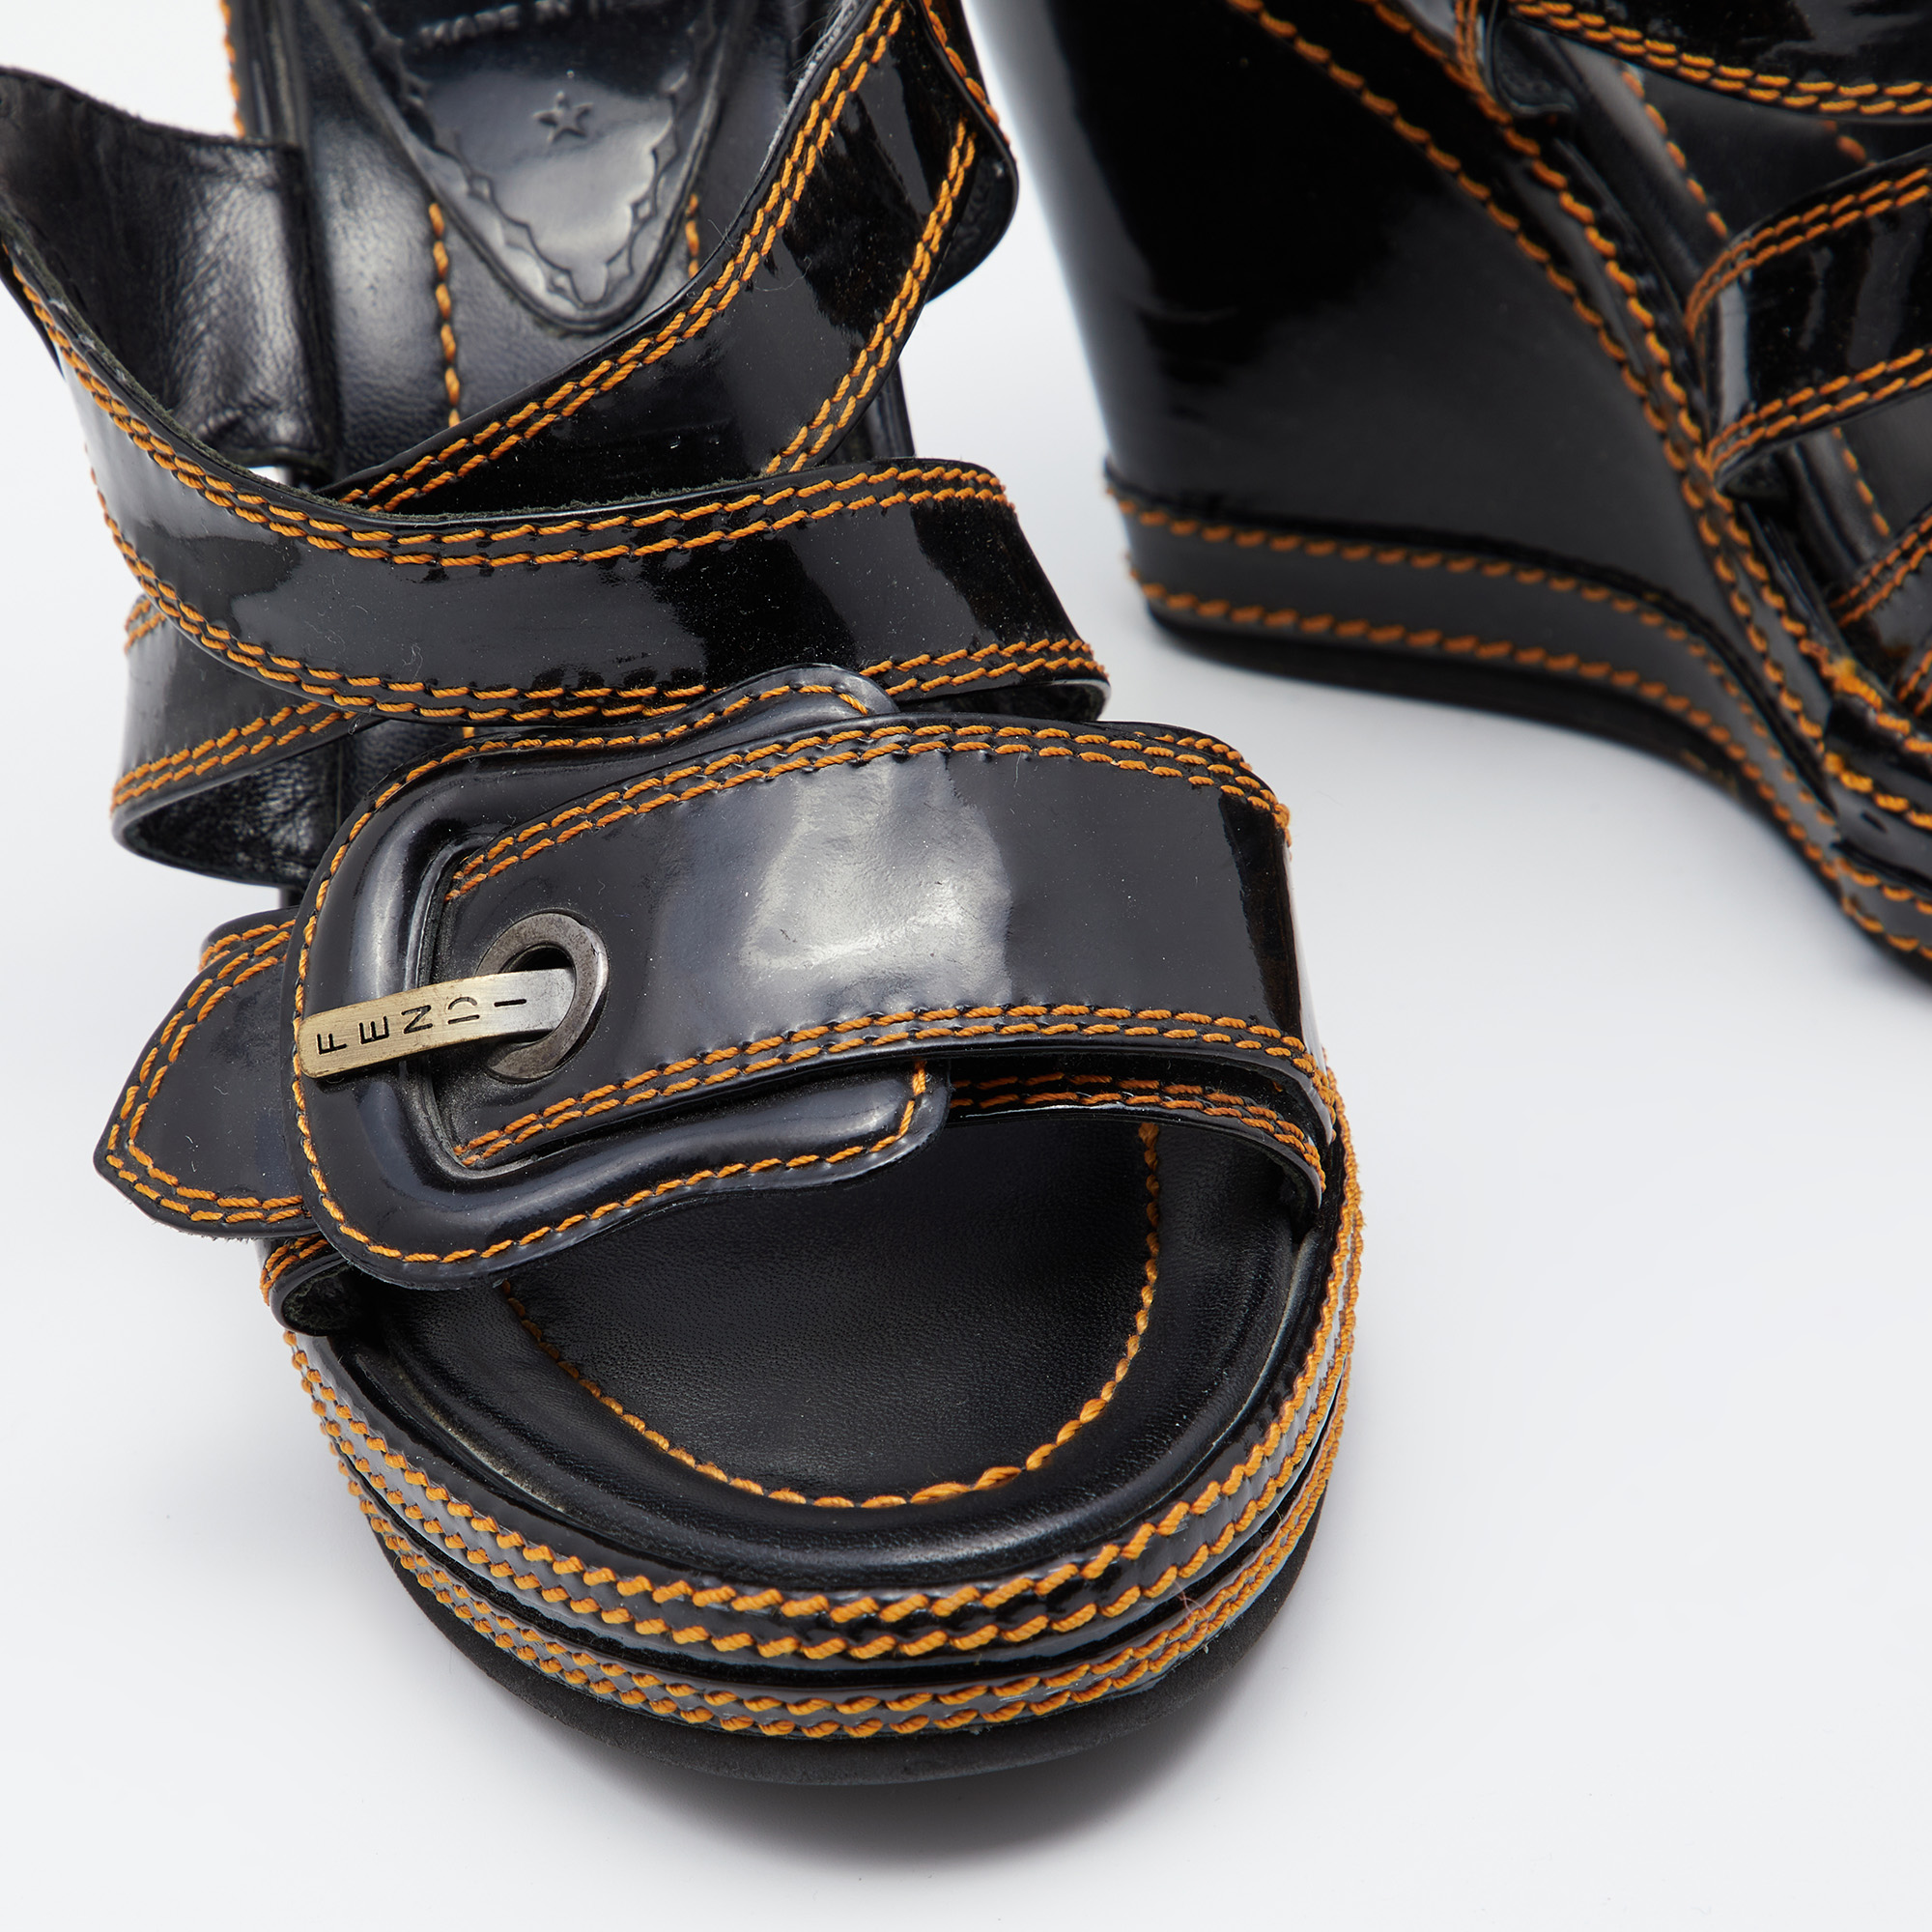 Fendi Black Patent Leather B Buckle Platform Wedge Sandals Size 37.5